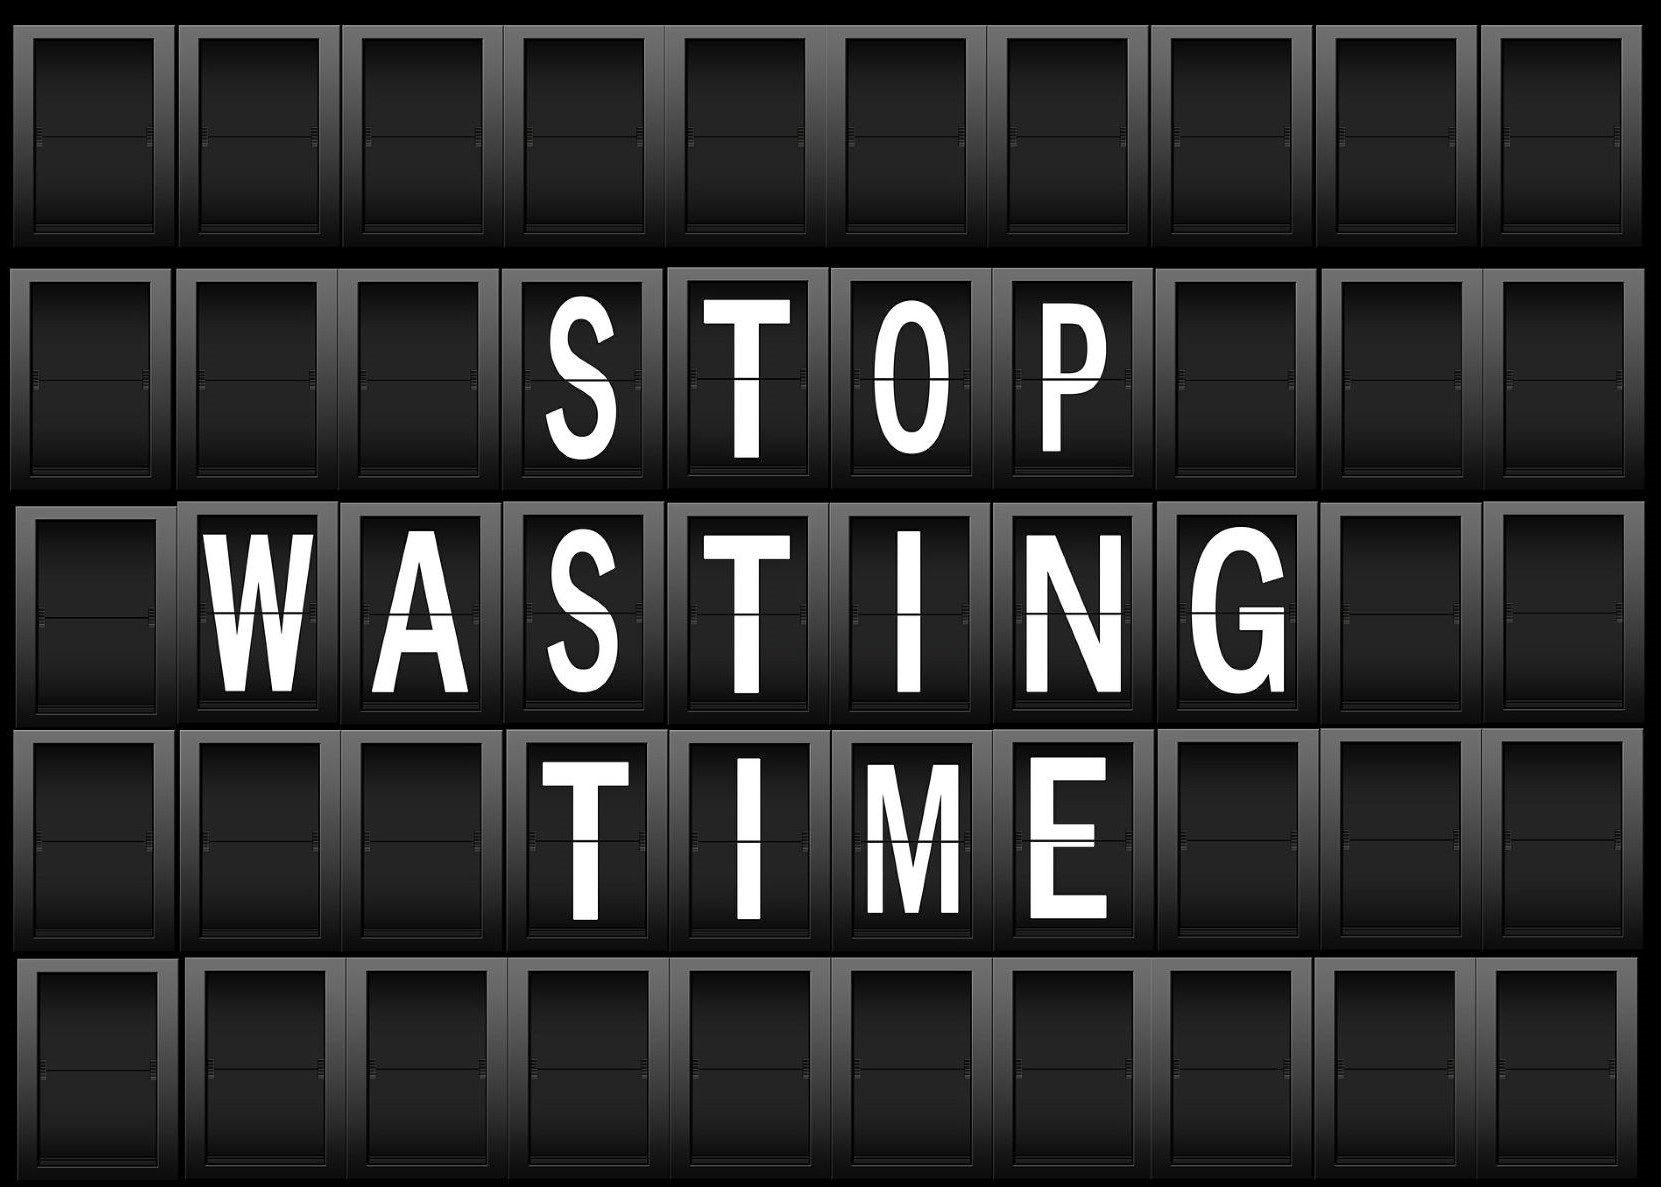 Luchthaven - Stop wasting time - Foto: Geralt (Pixabay)